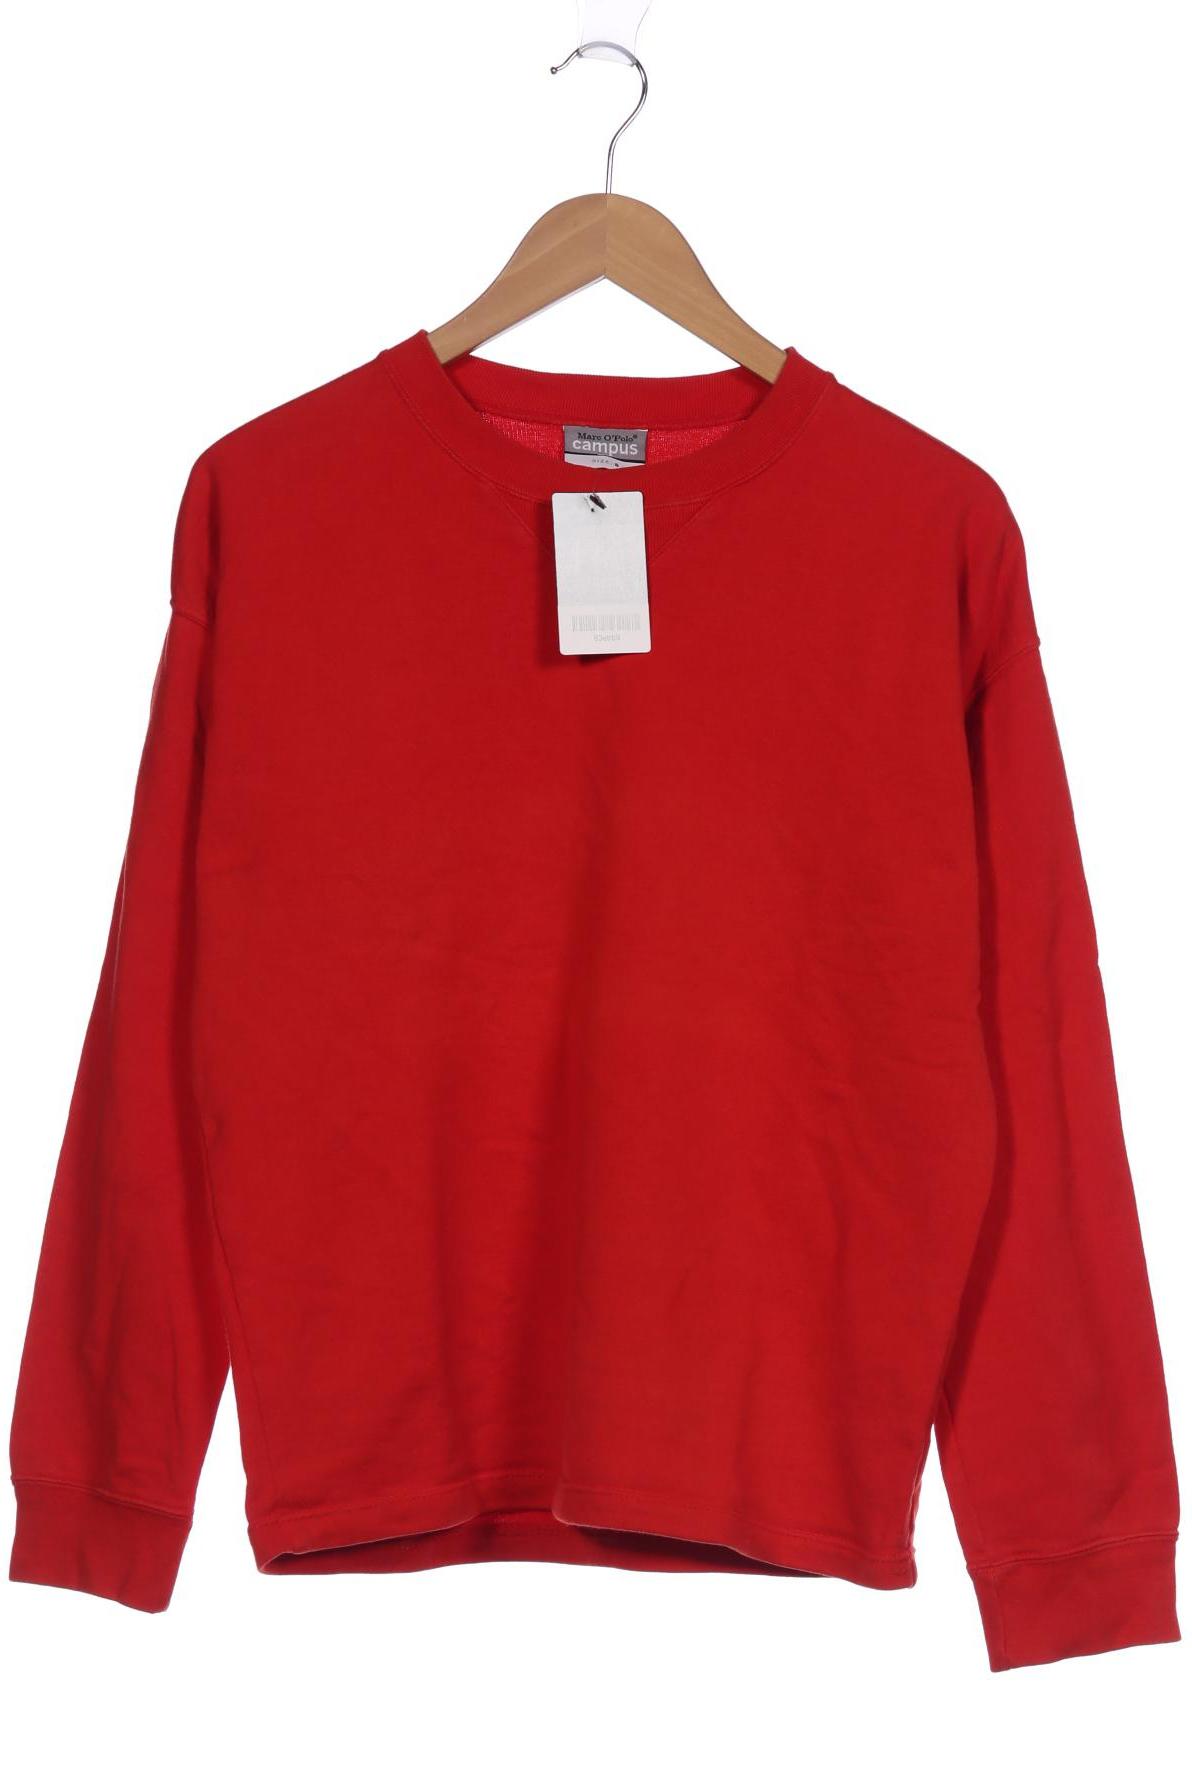 Marc O Polo Damen Sweatshirt, rot von Marc O Polo